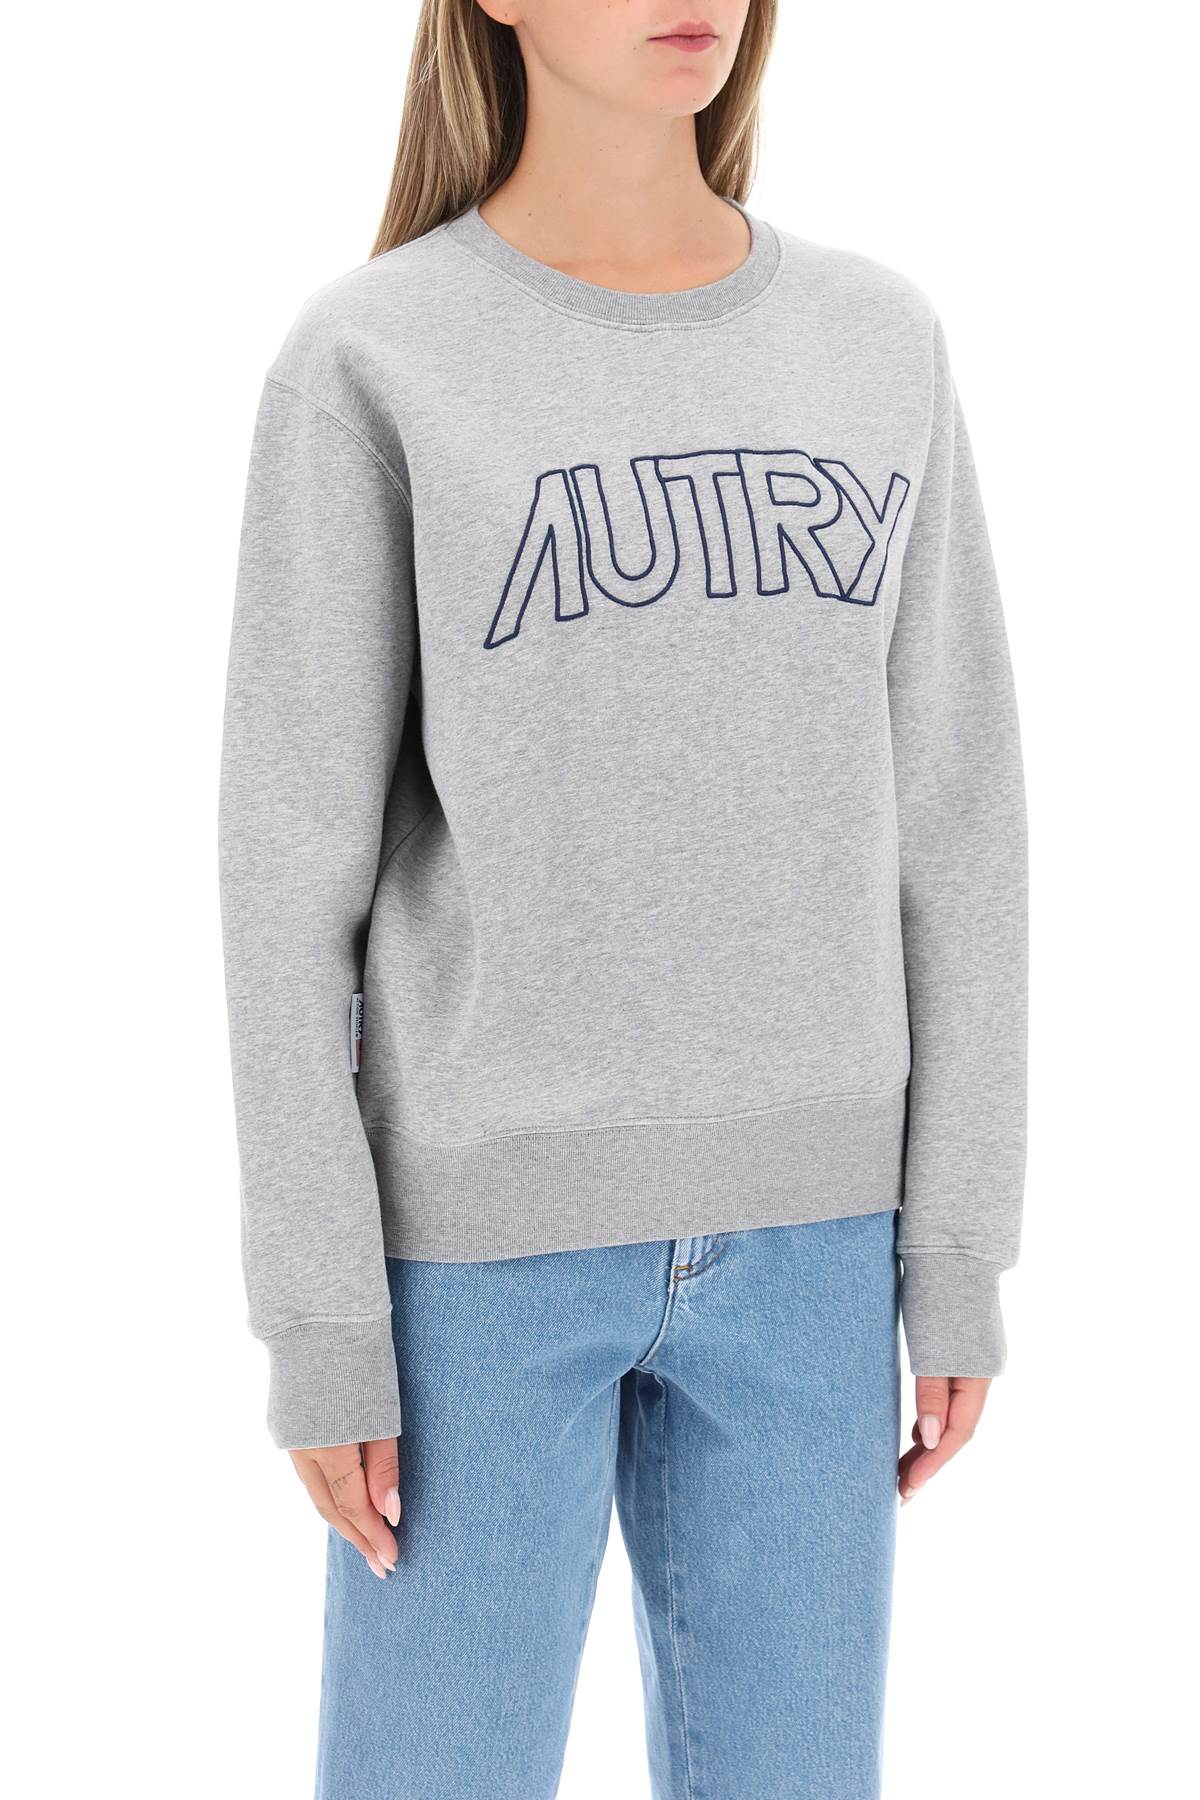 Autry crew-neck sweatshirt with logo embroidery-1